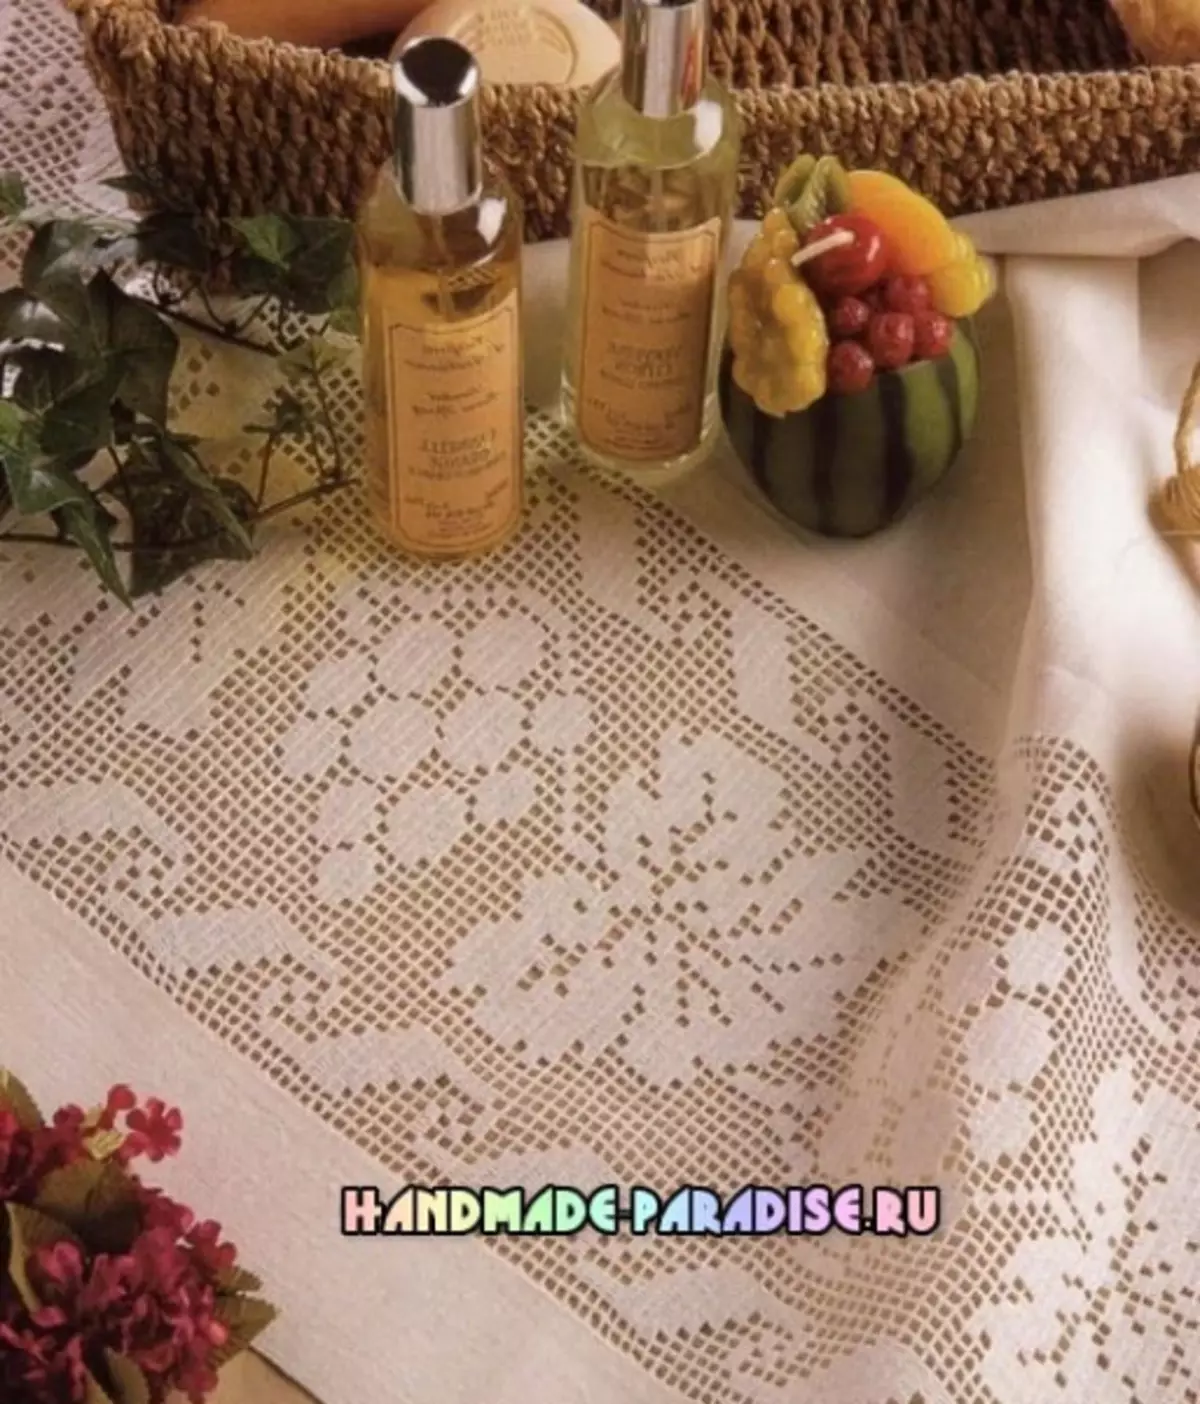 Tablecloths, Napkins and Pillows - Crochet Circuit